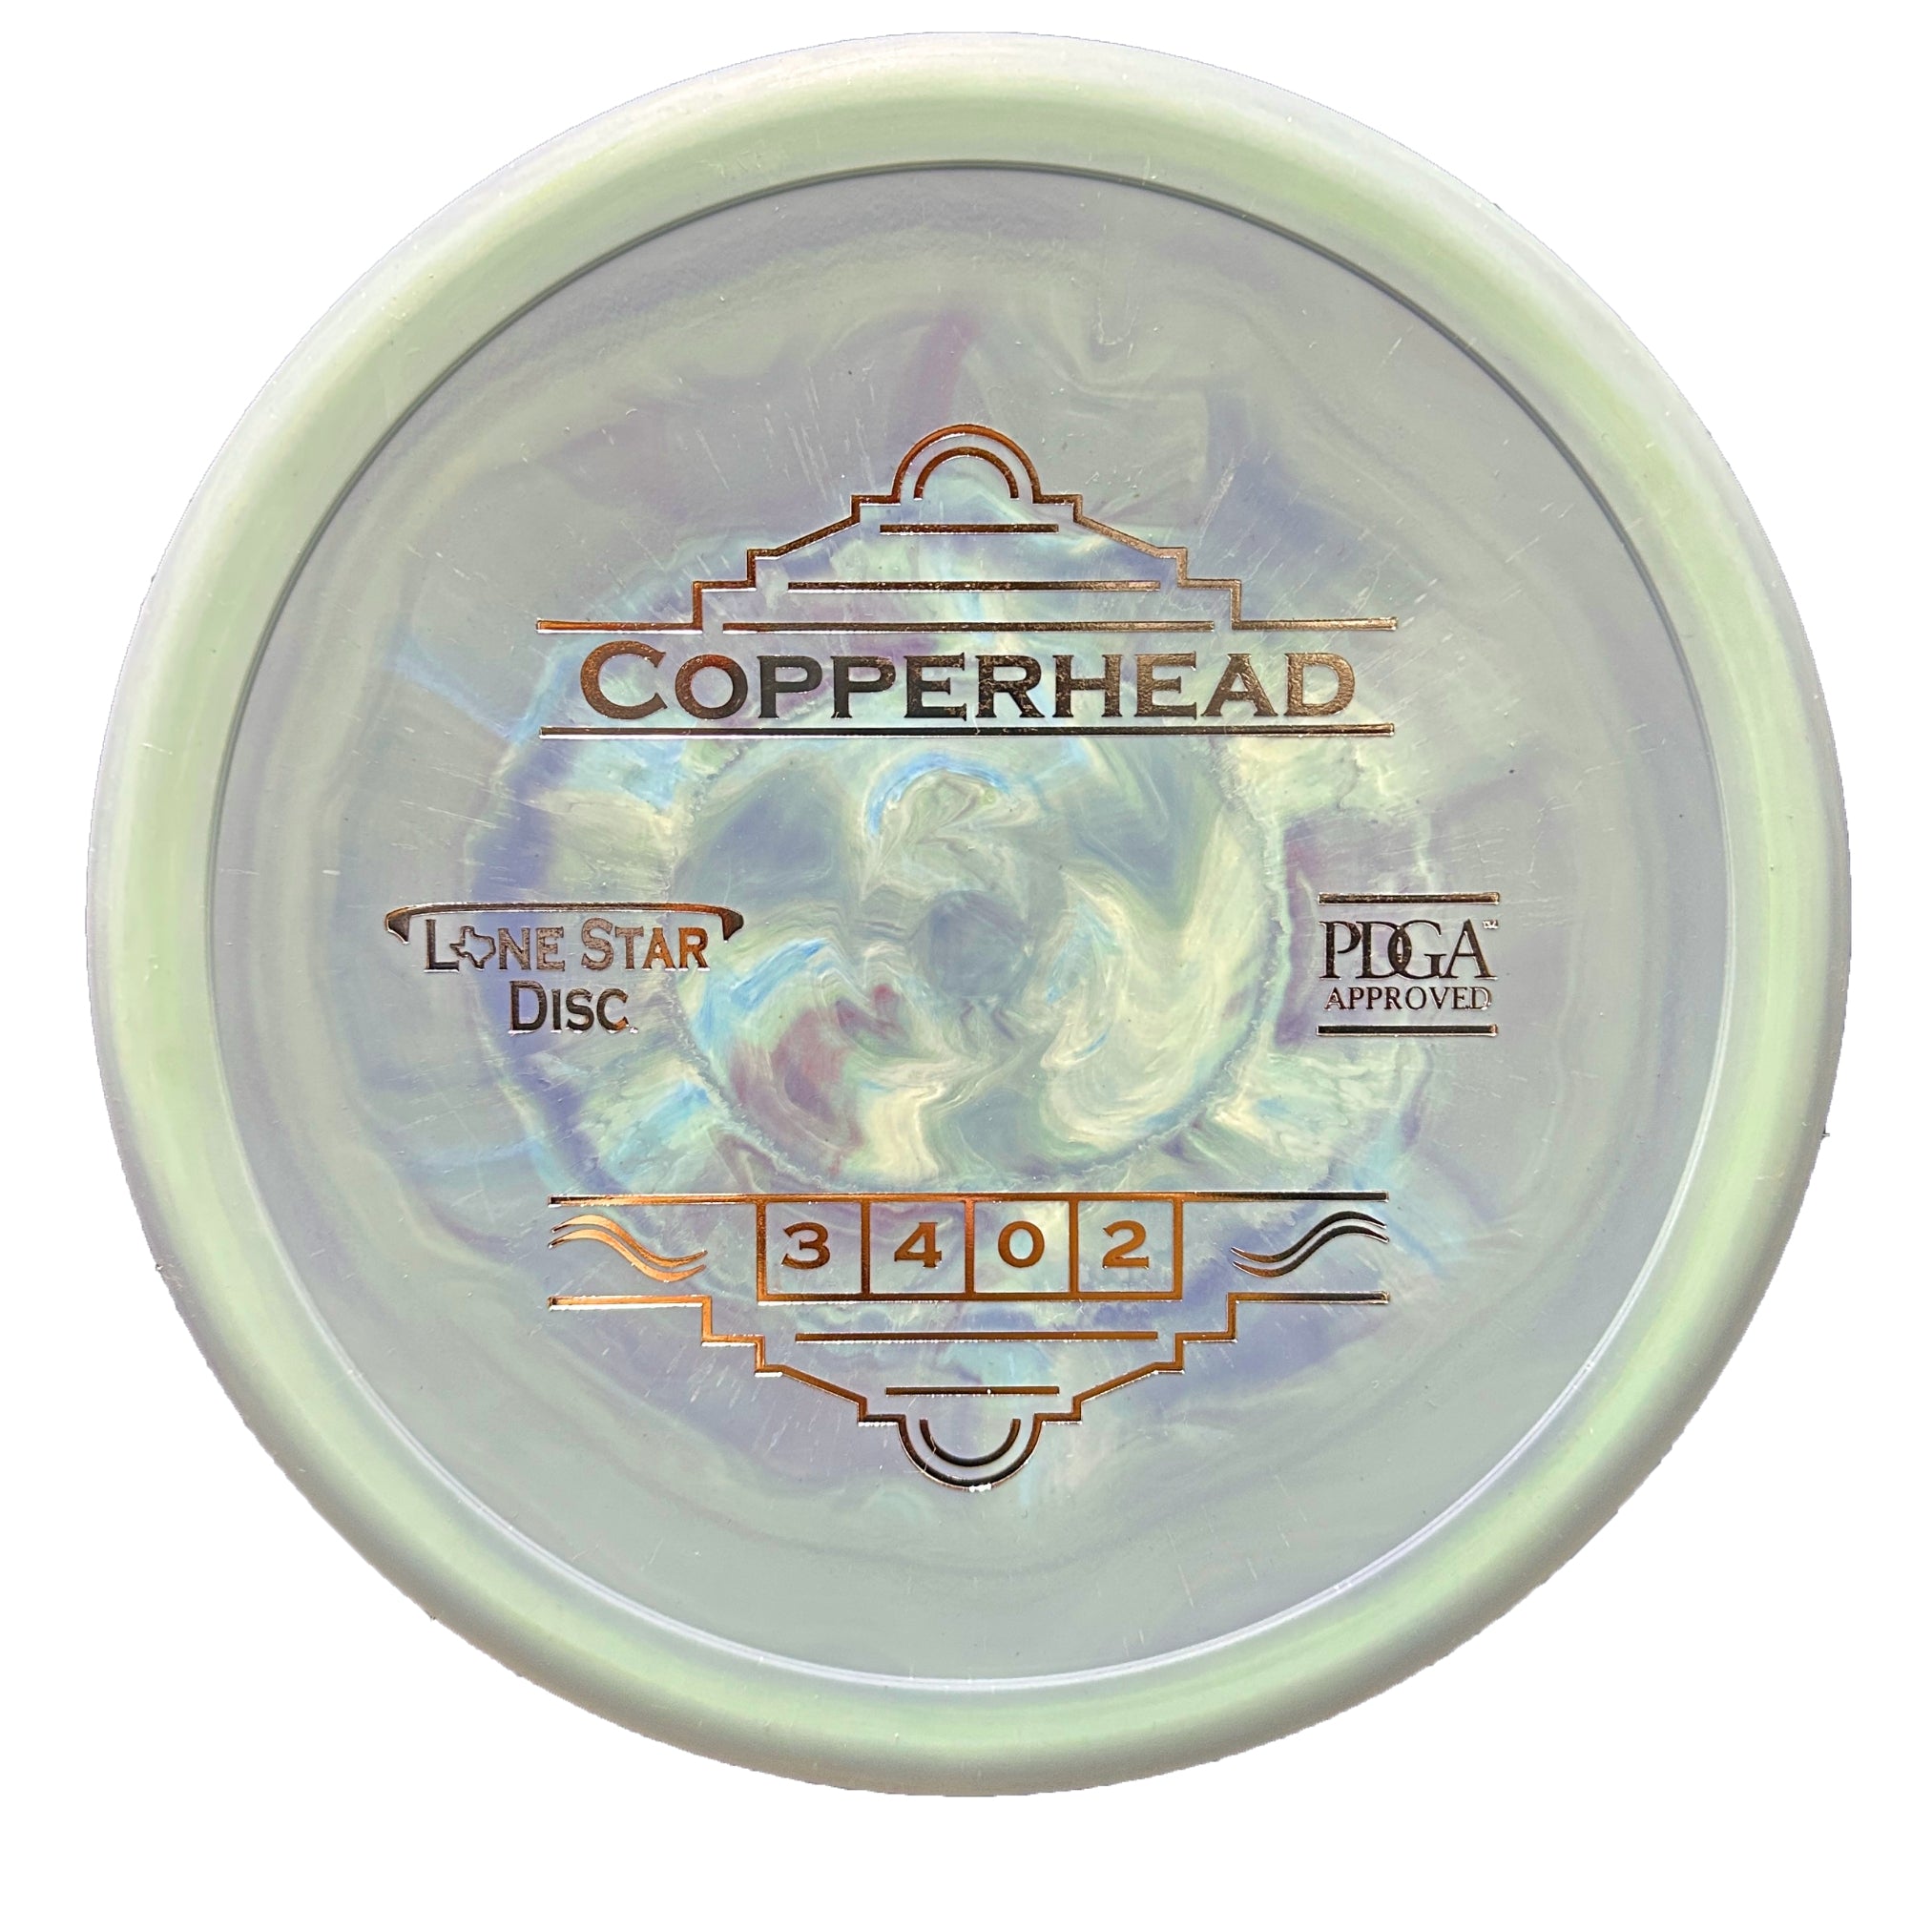 Lone Star Disc Copperhead